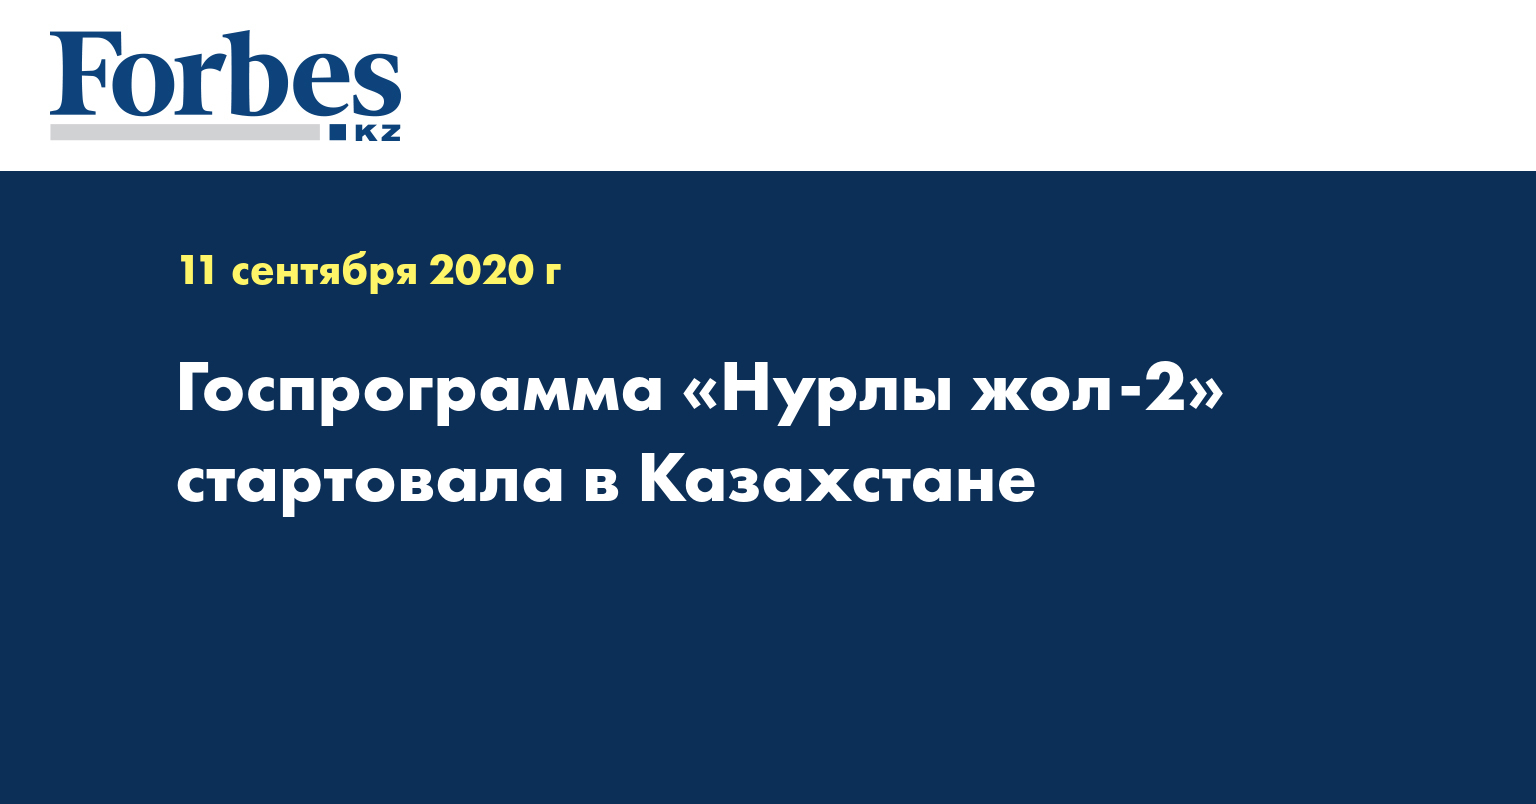  Госпрограмма «Нурлы жол-2» стартовала в Казахстане